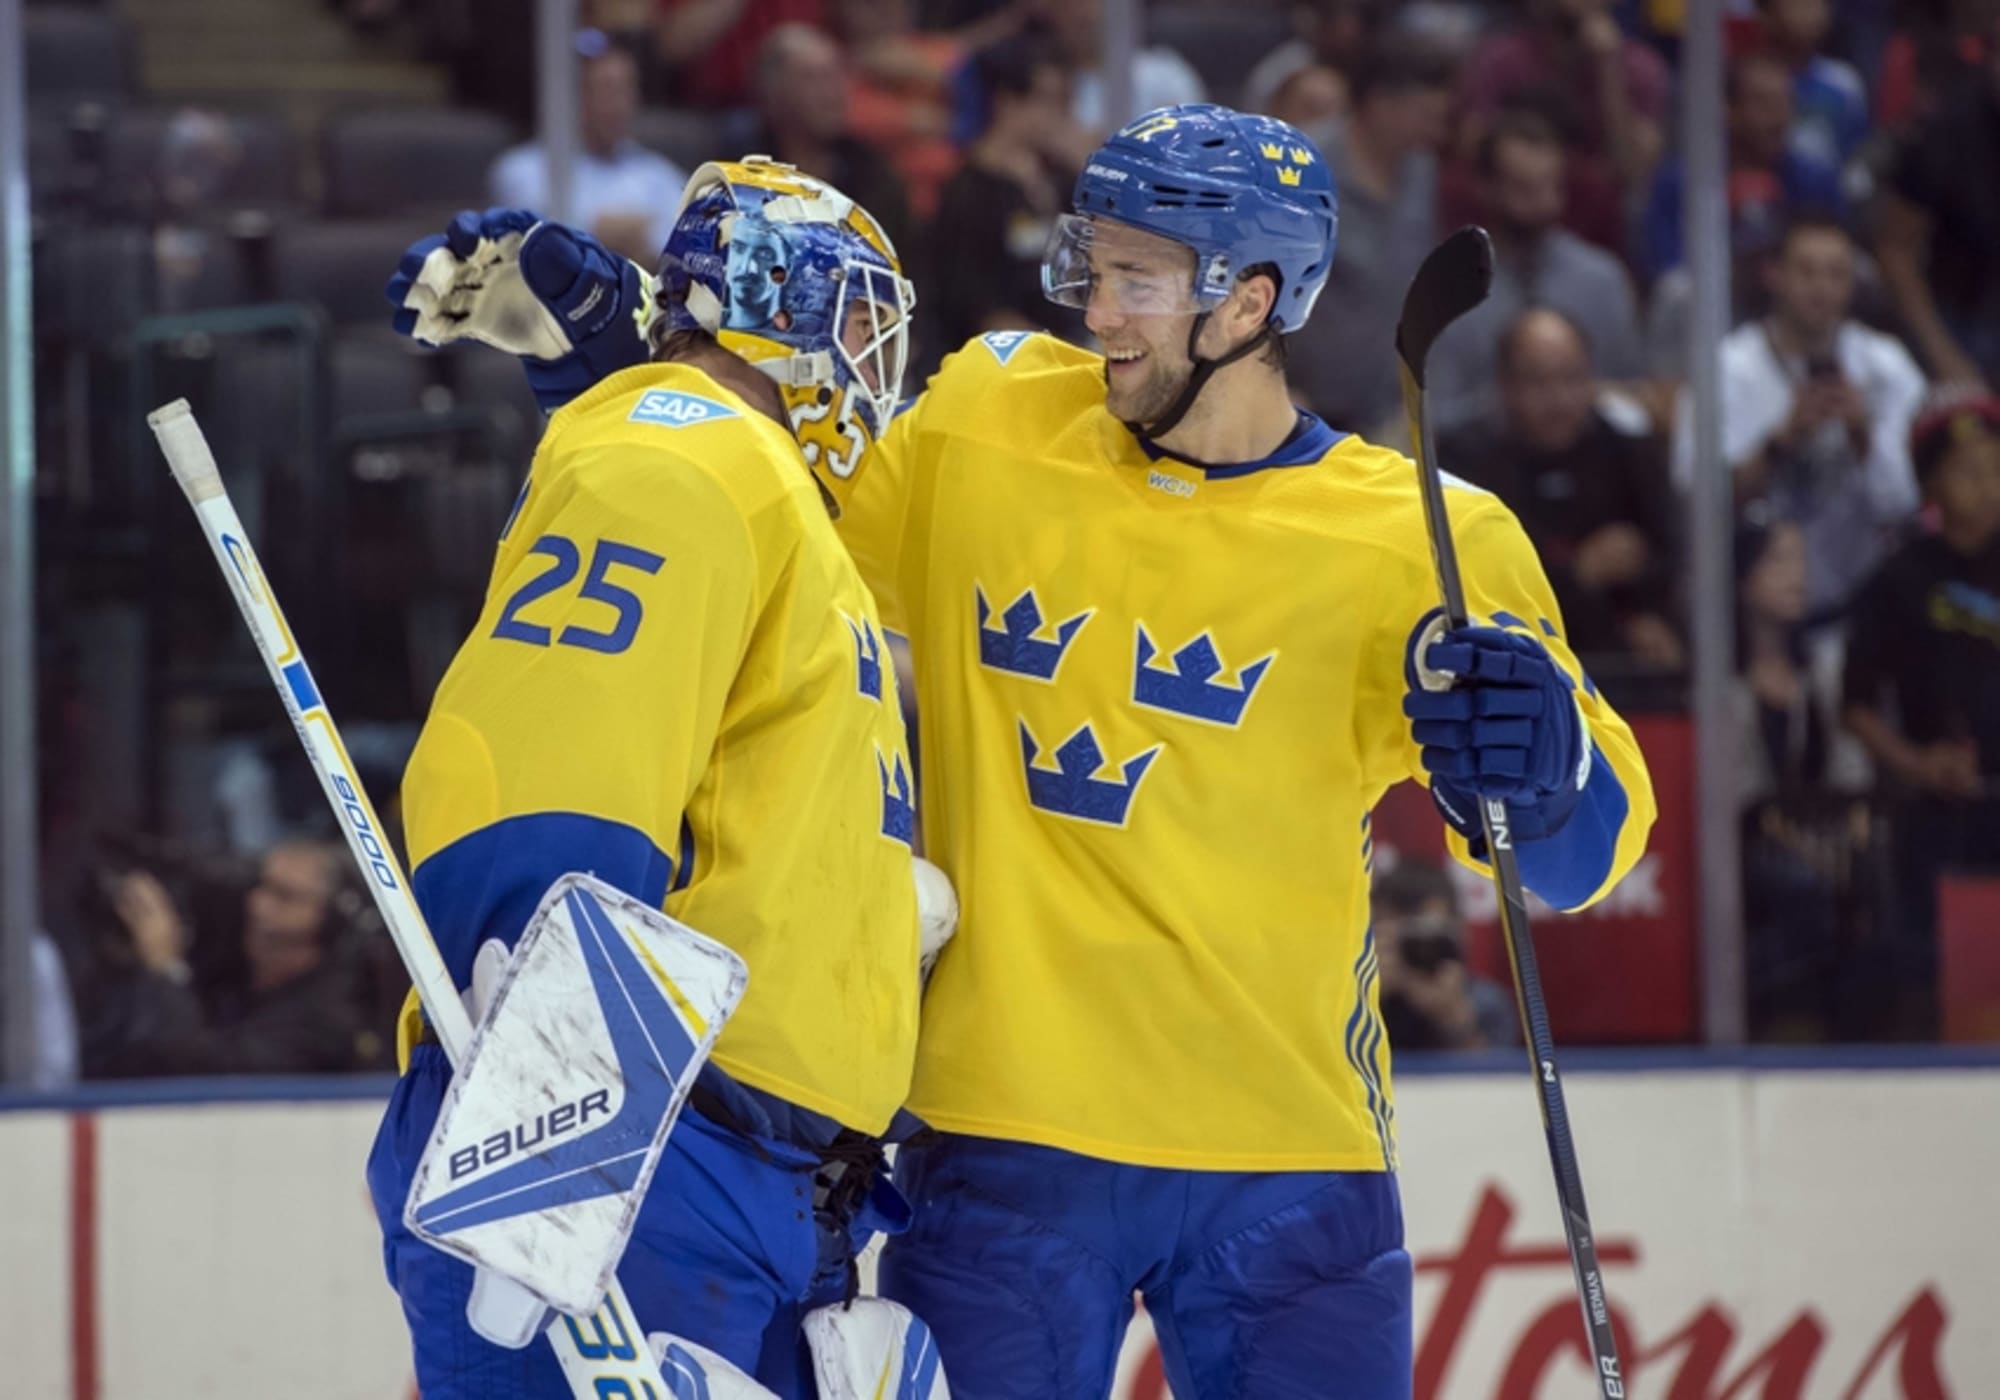 sweden hockey jersey 2016